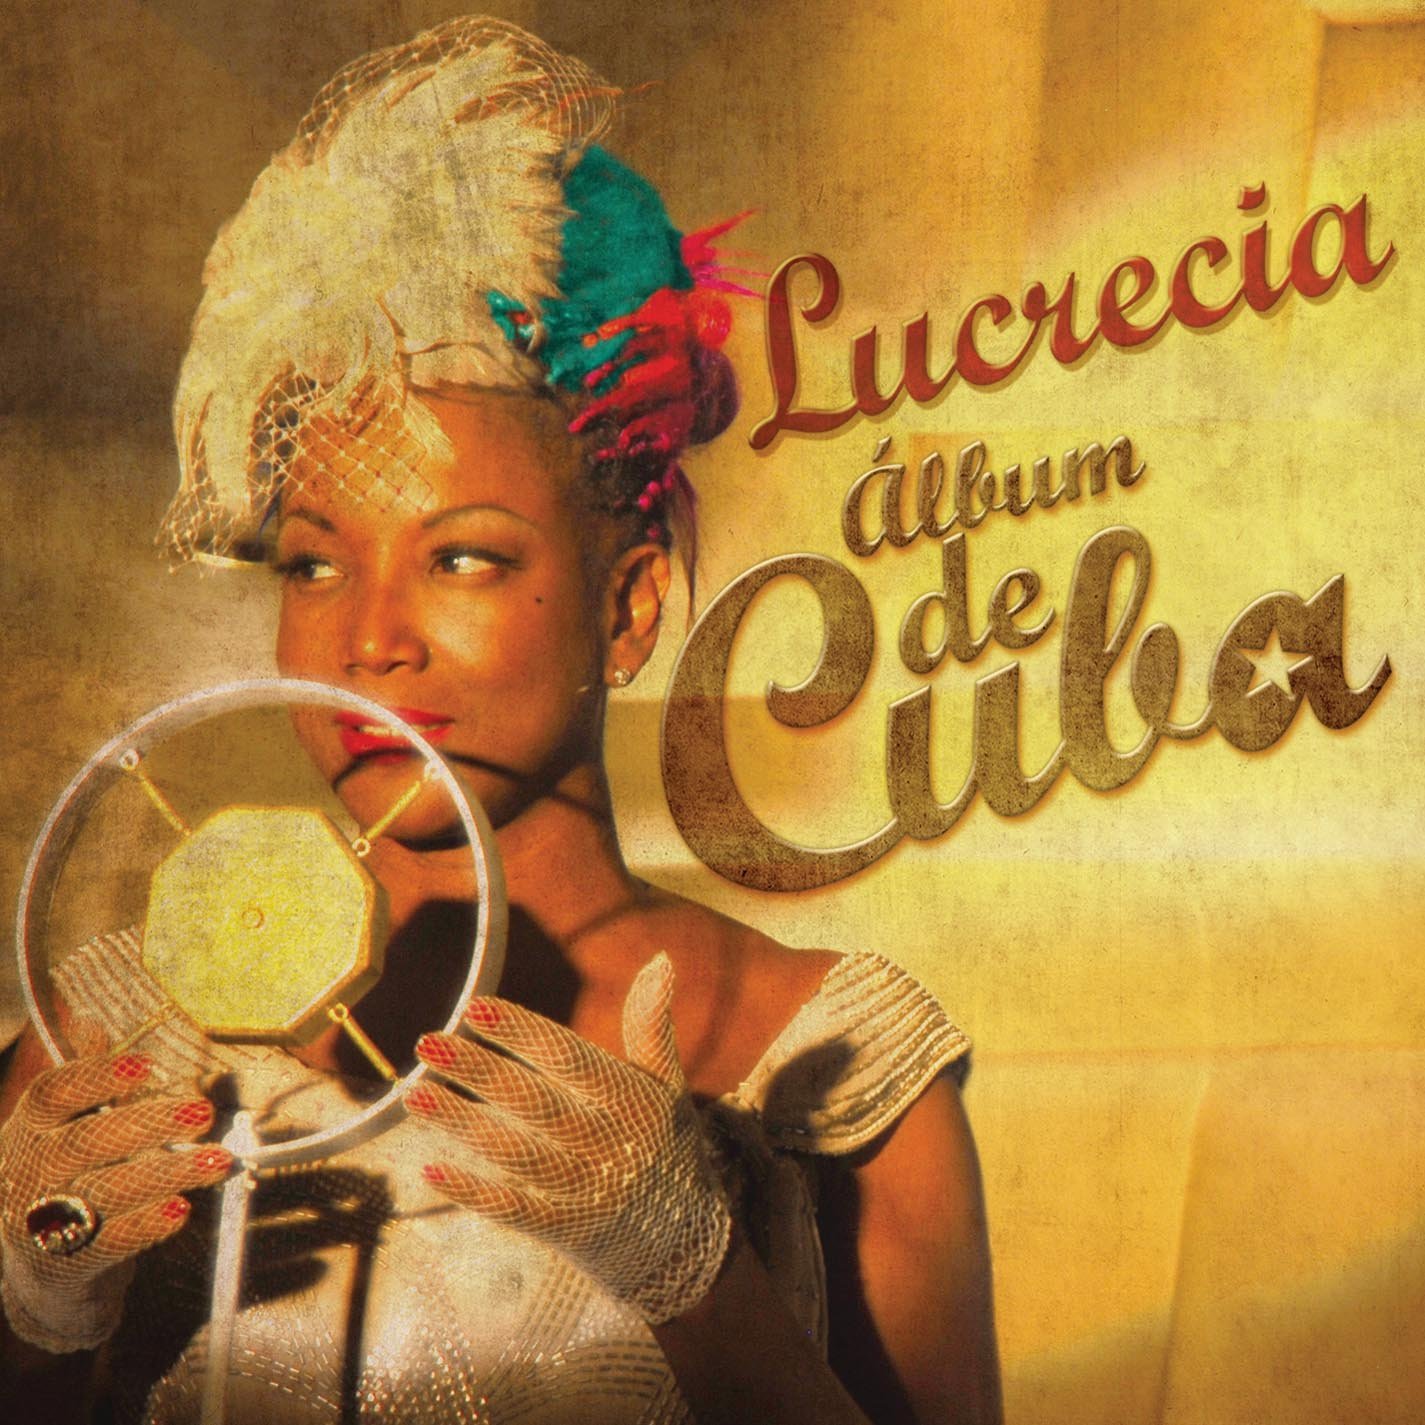 LUCRECIA - Album de Cuba cover 